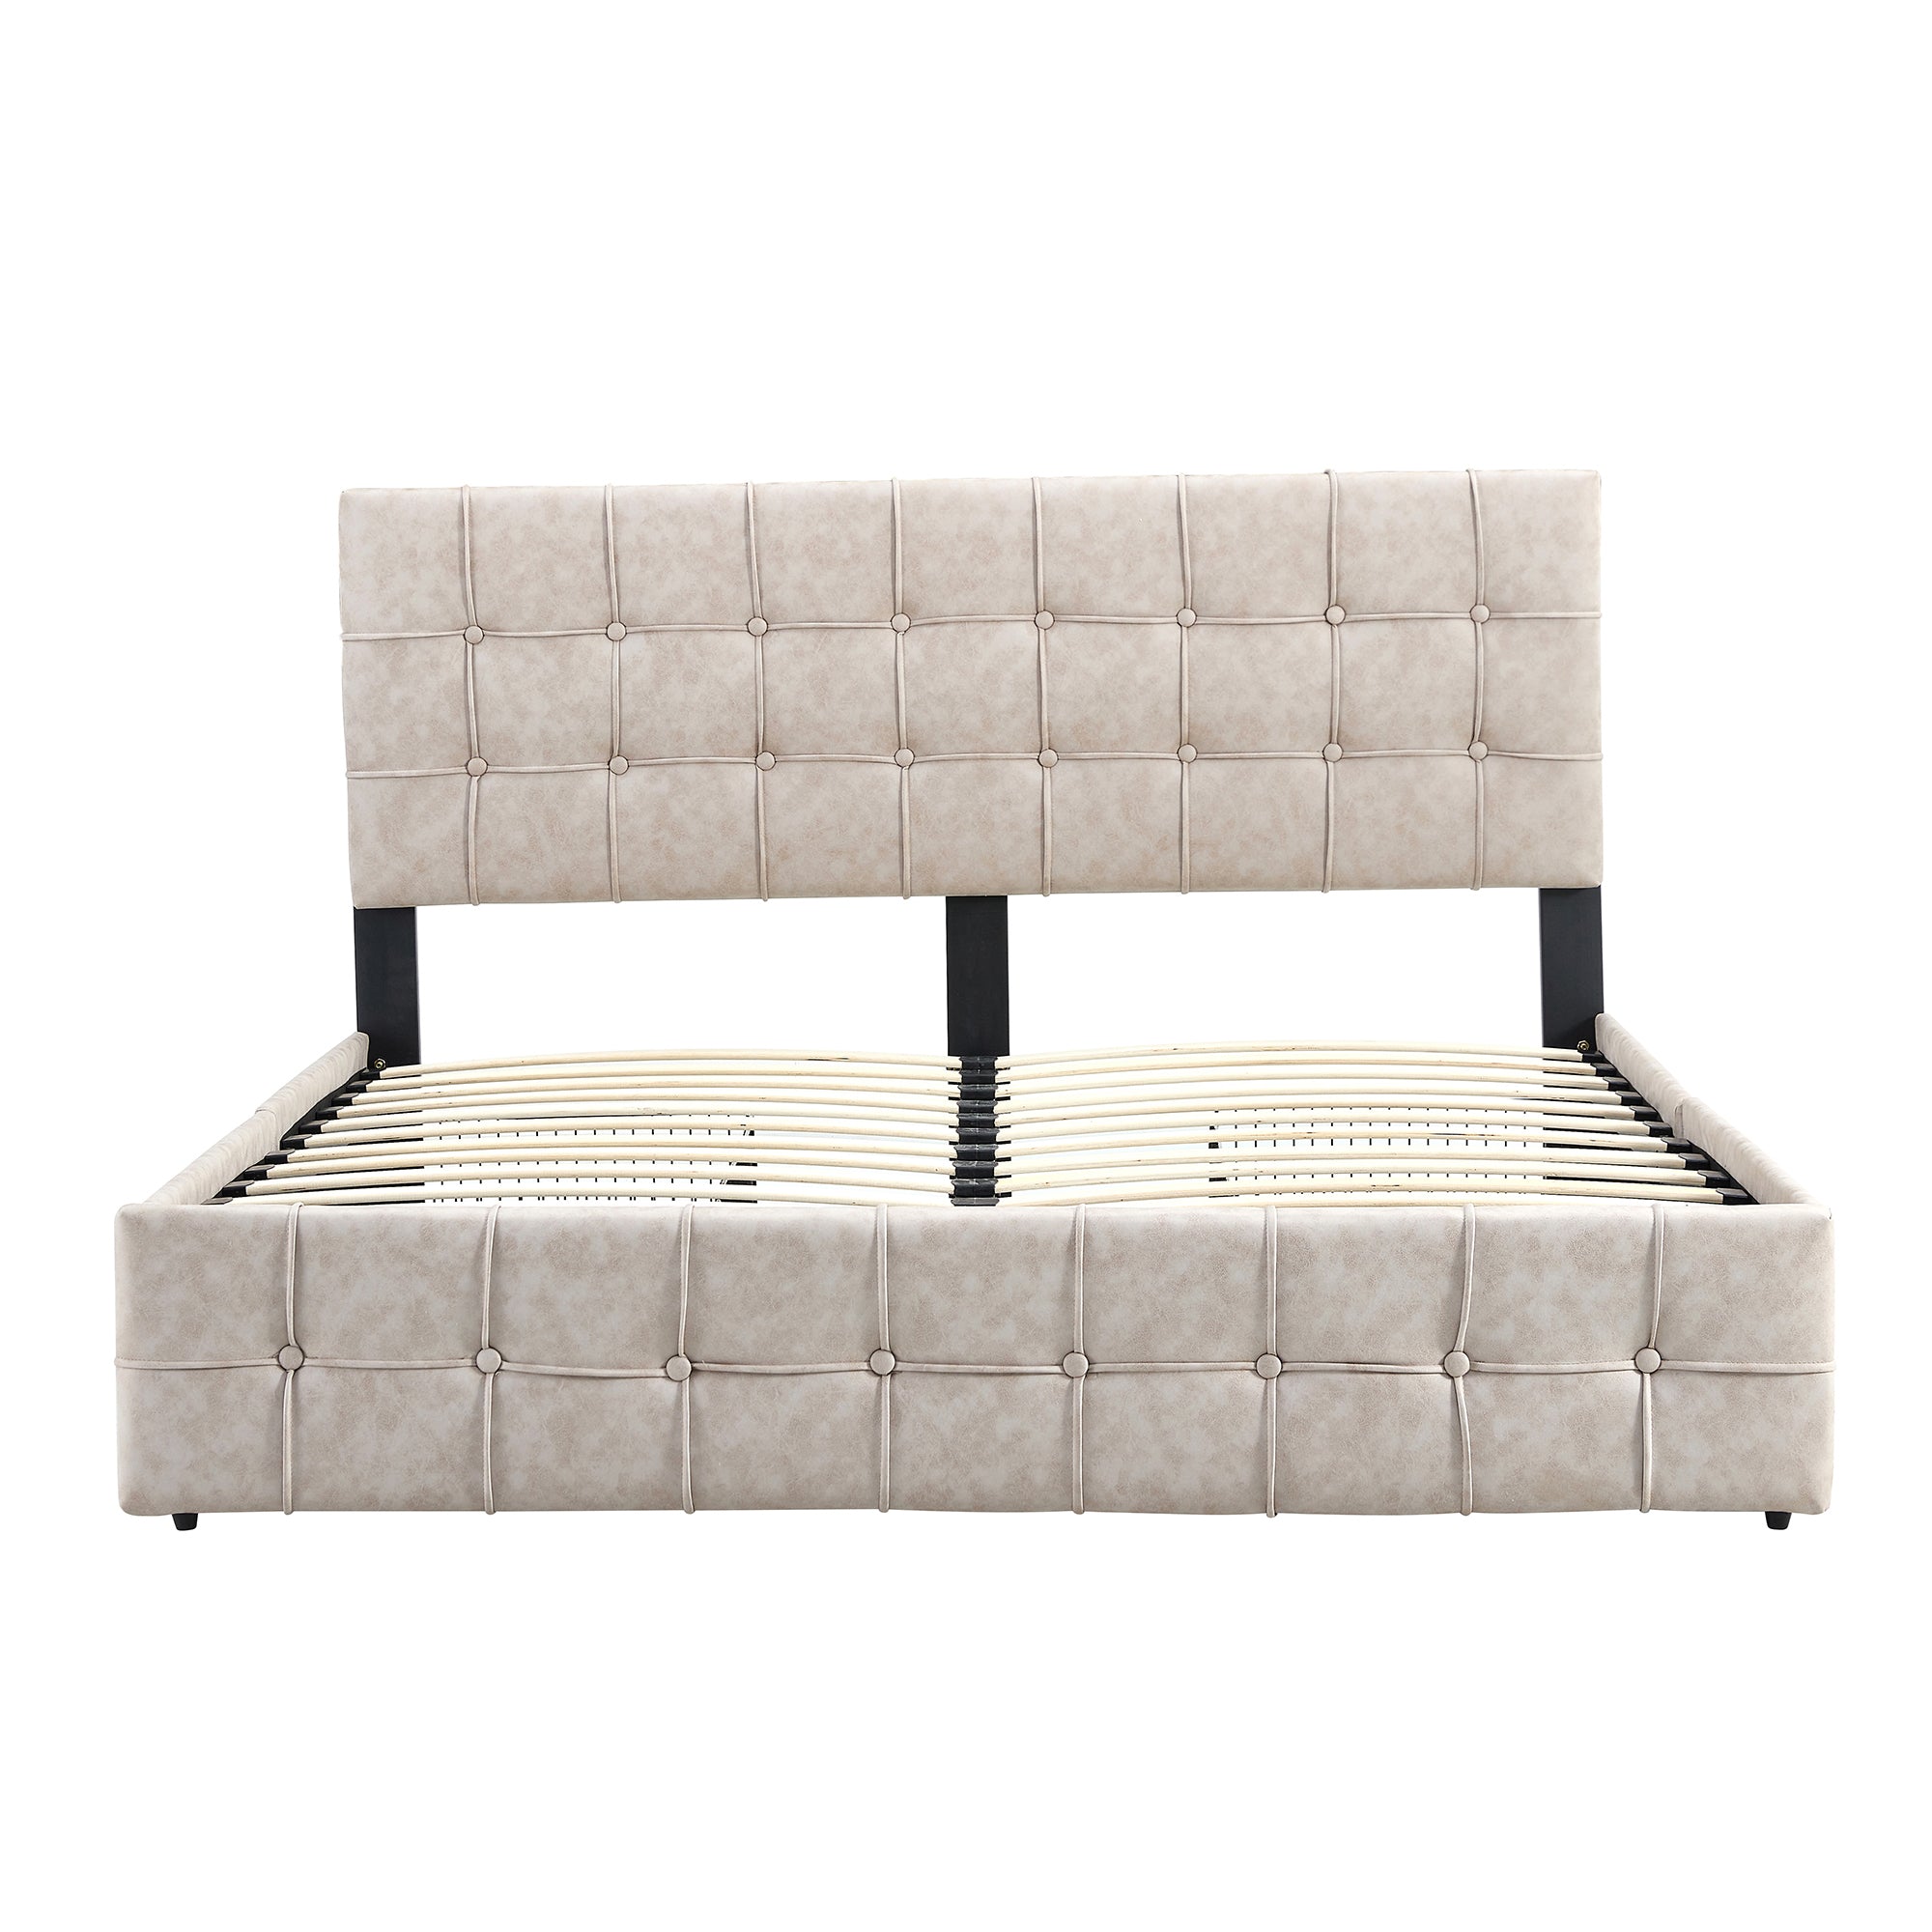 Full Size Upholstered Platform Bed Frame with Adjustable Headboard with 4 Drawers Storage, Wooden Slat Support Mattress Foundation - Beige